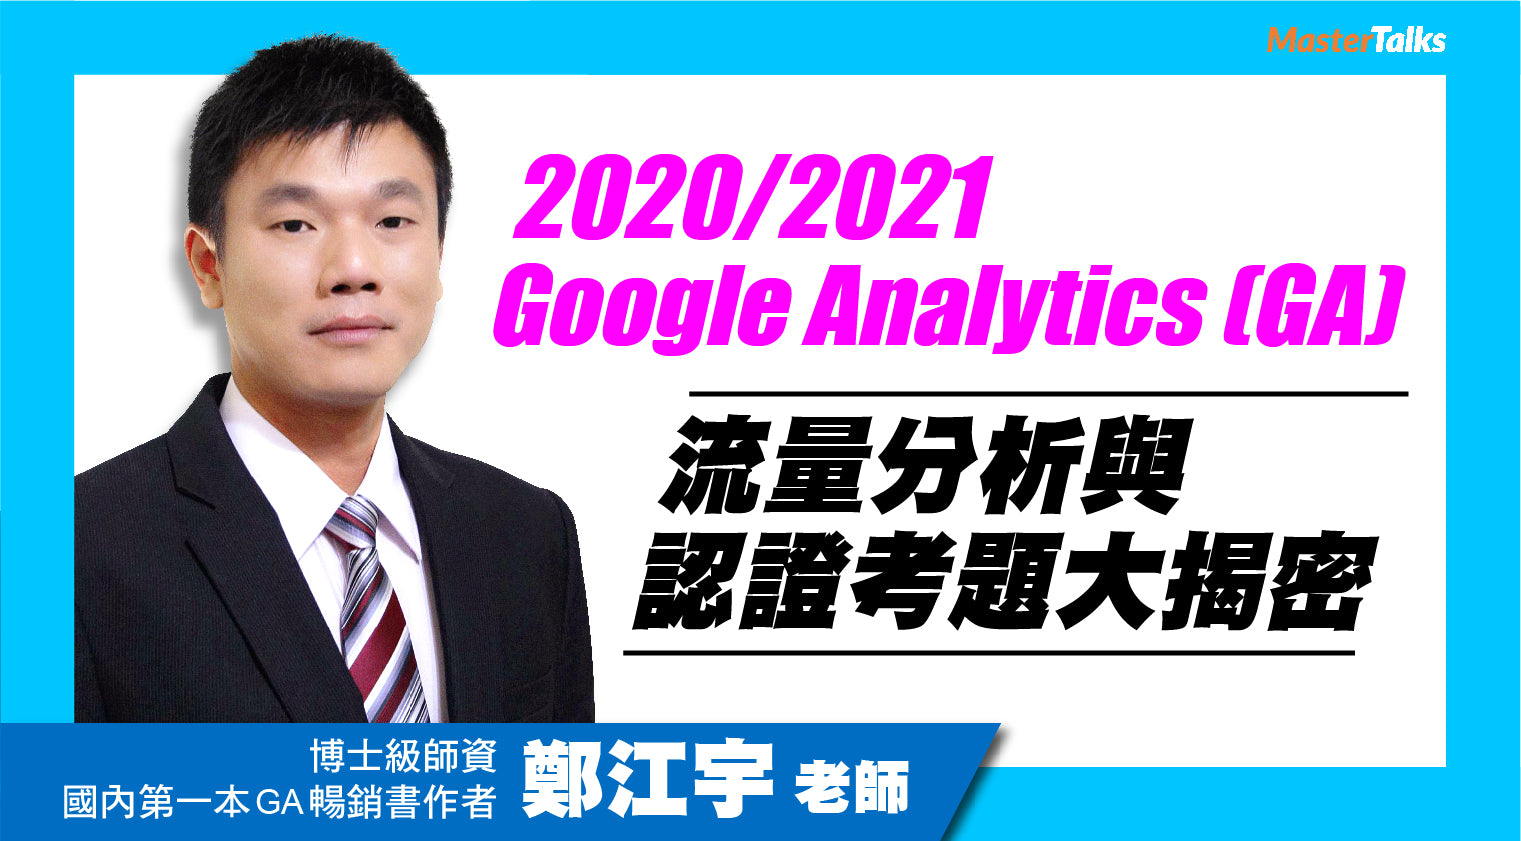 2020/2021 Google Analytics (GA) IQ<br>流量分析與認證考題大揭密 - MasterTalks 內容電力公司